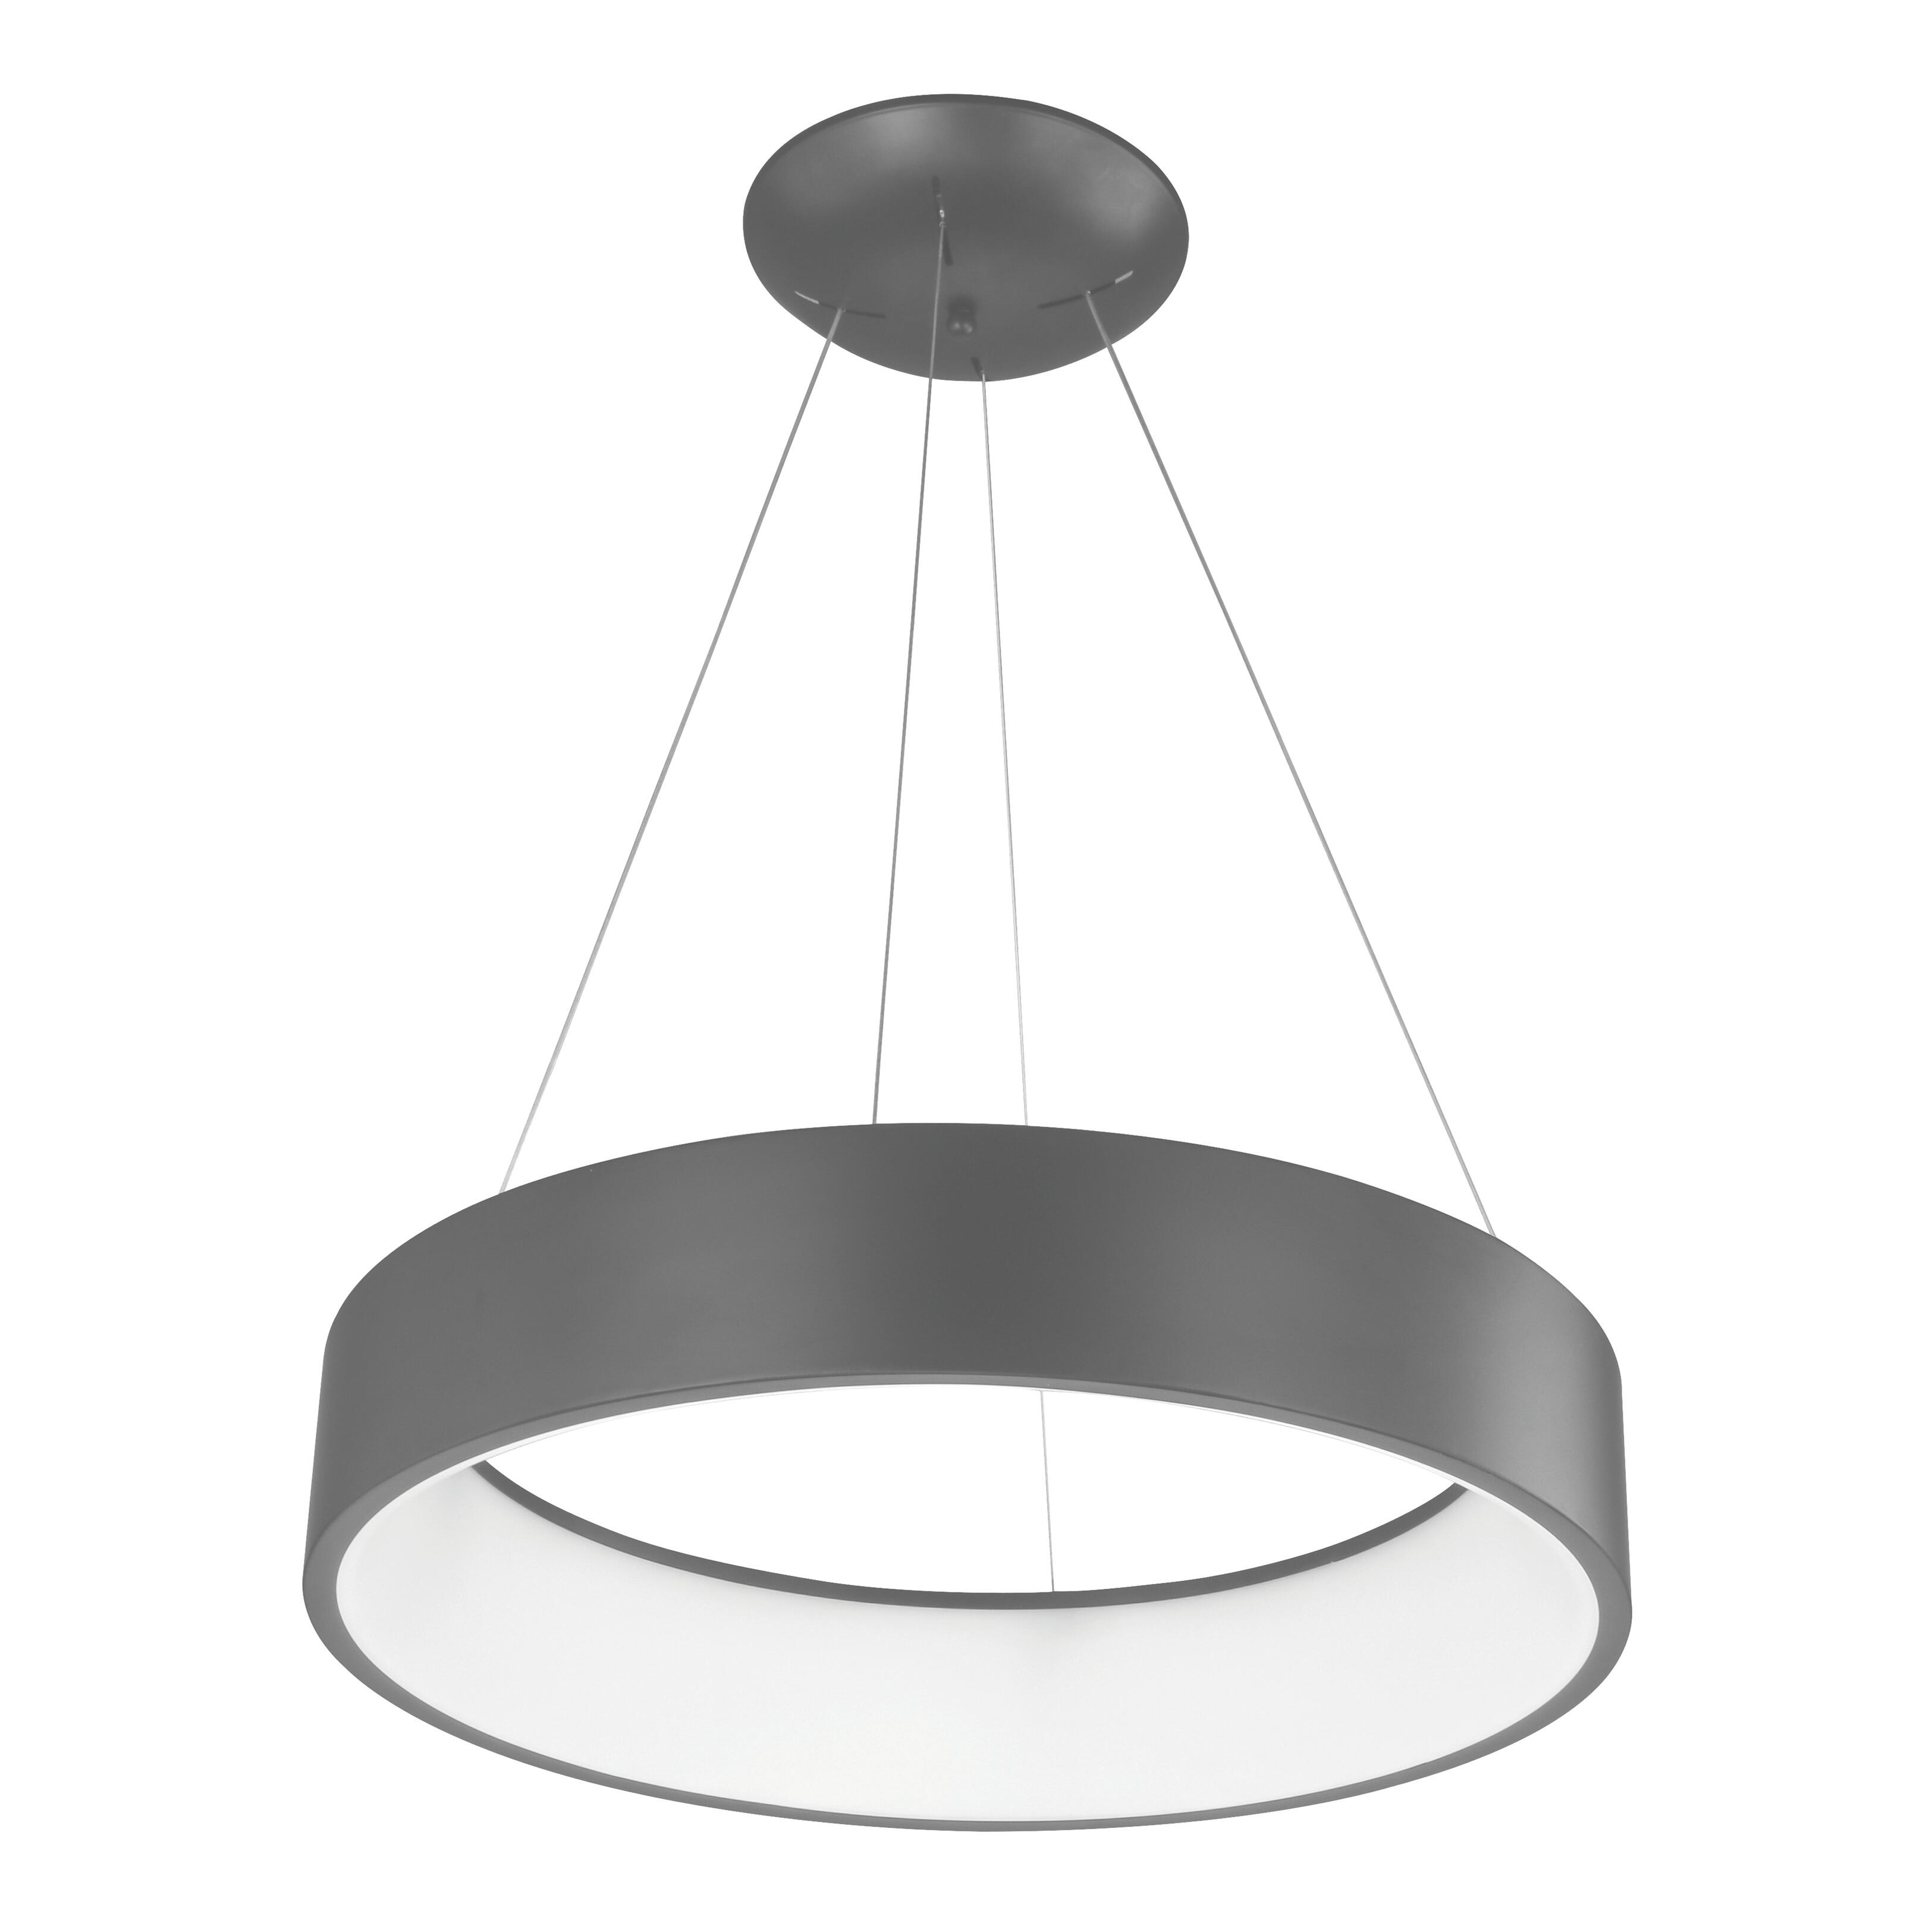 Lampadario Design Pure grigio, in metallo, D. 45 cm, WOFI - 3